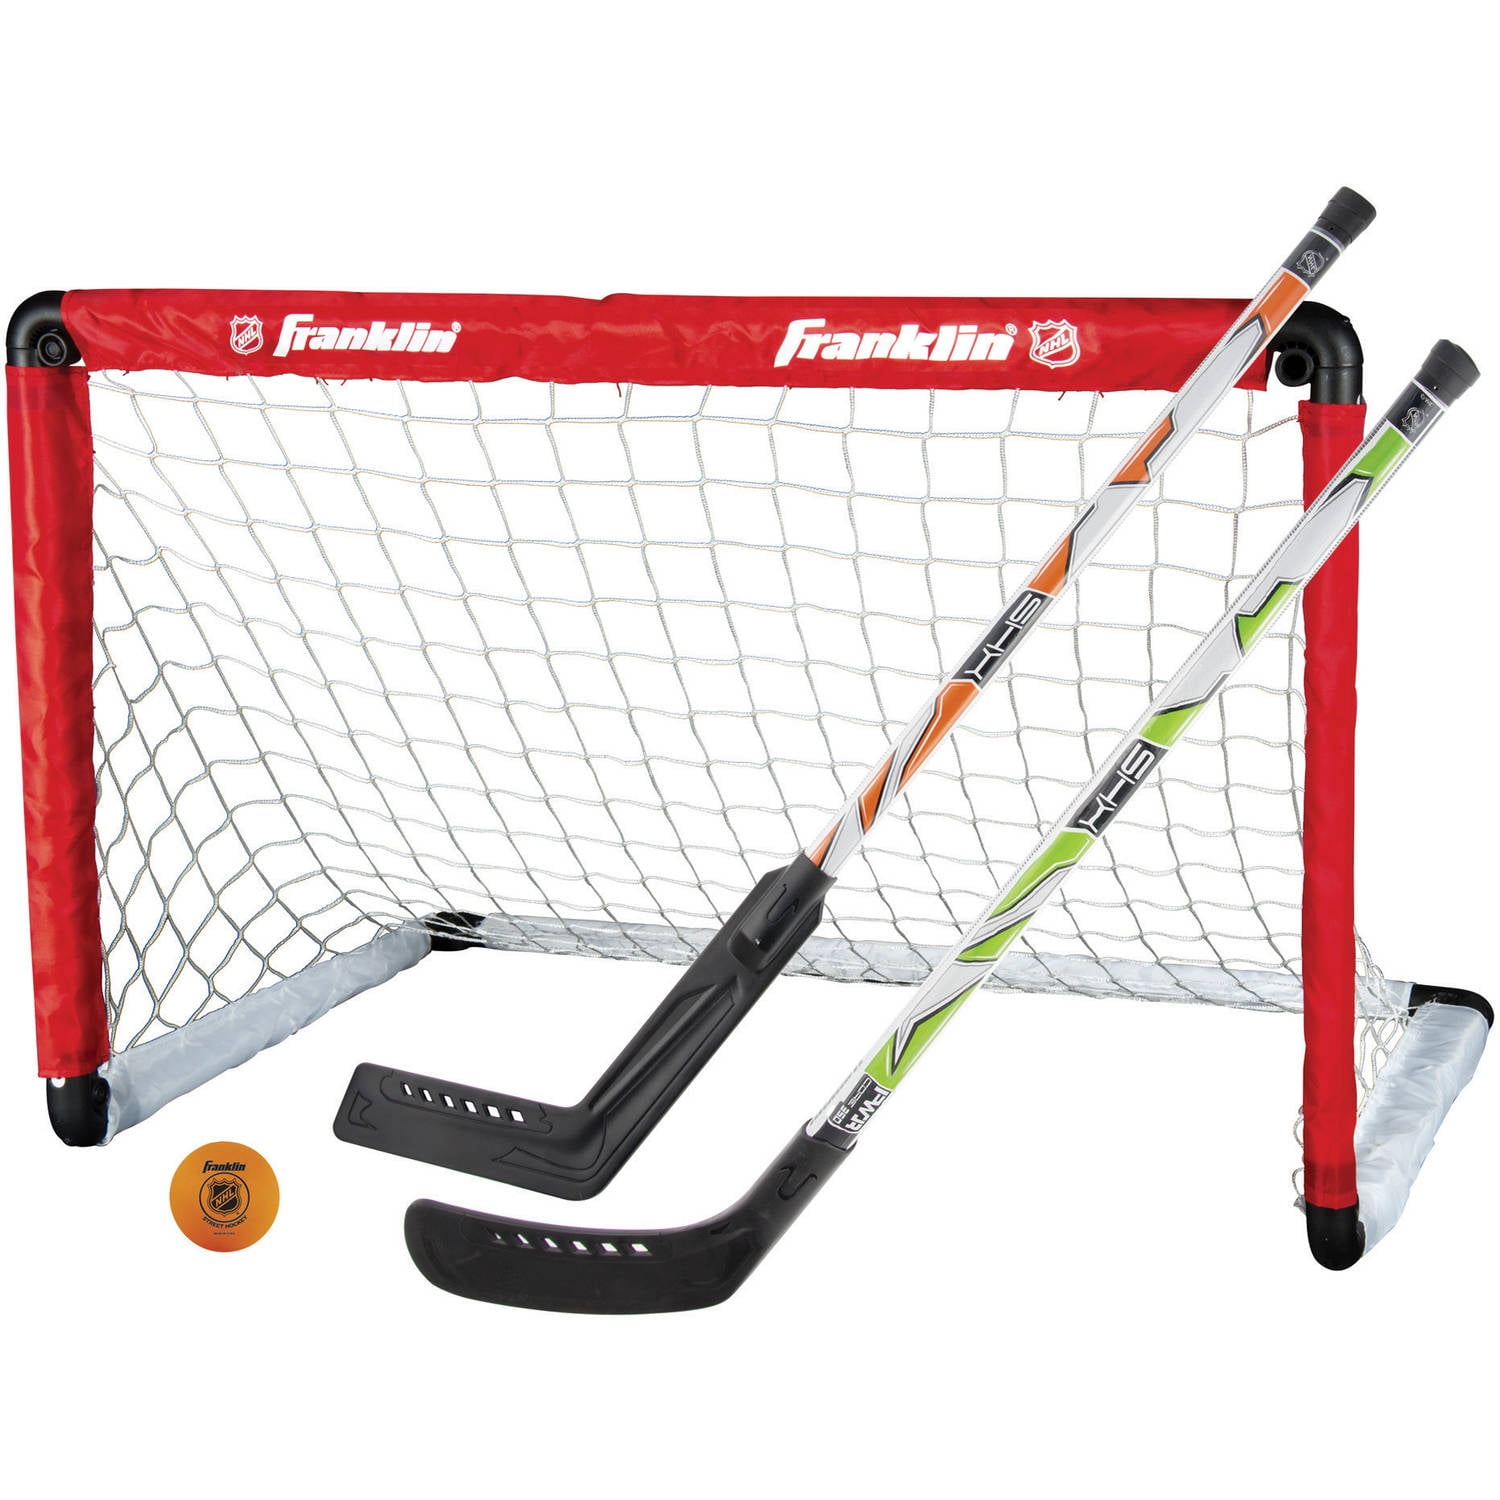 Hockey Pucks Brand New Mini Foam by Franklin Sports NHL® in 3 Pack 